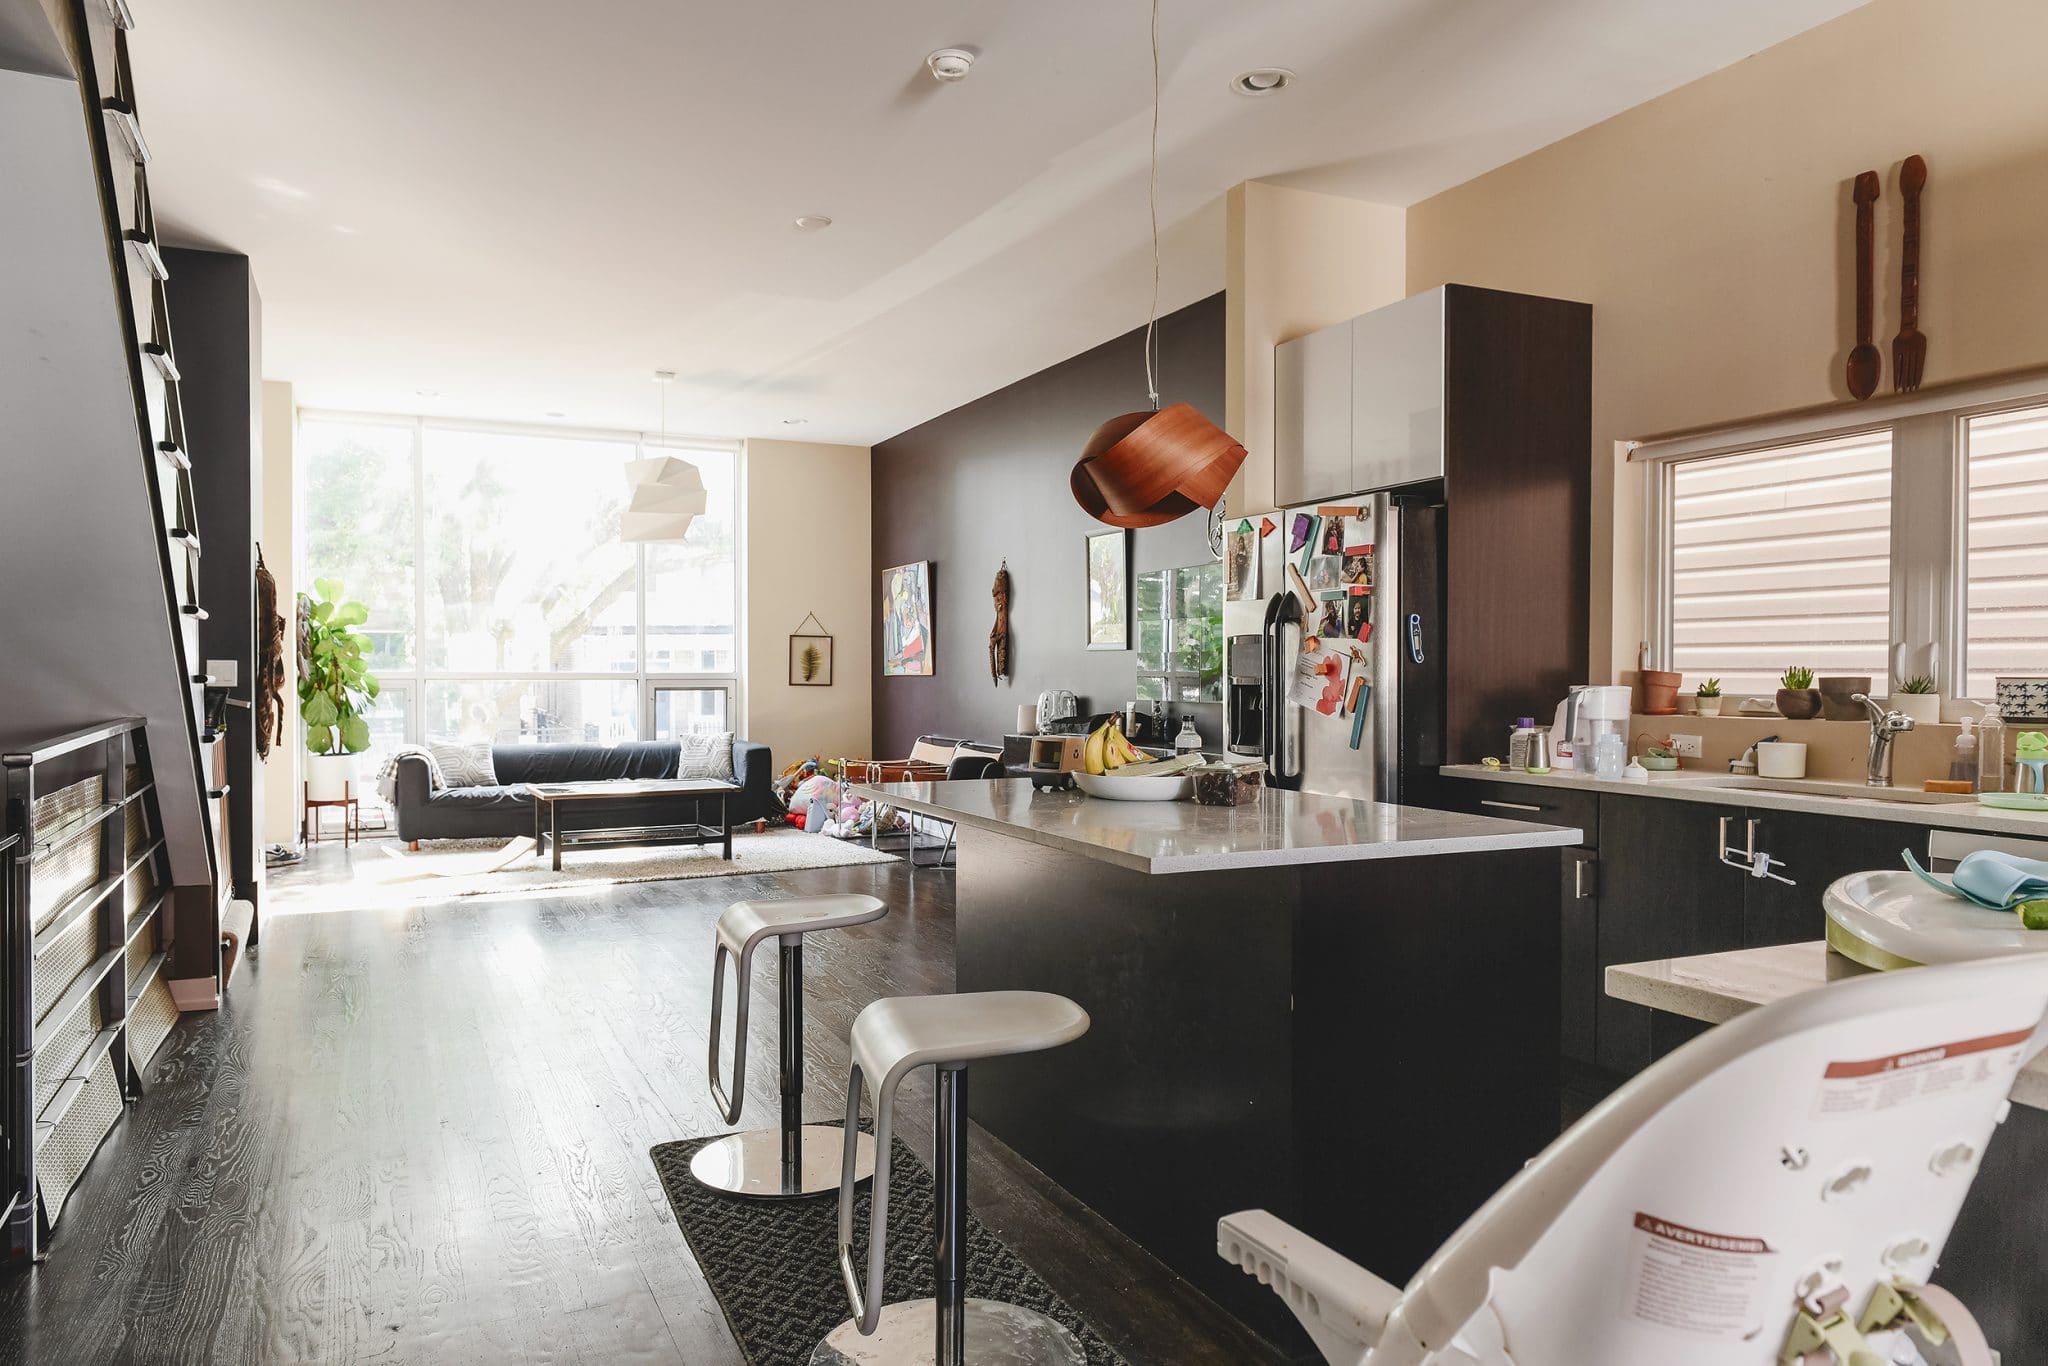 Dark and moody open floor plan, kitchen in center, gets an upgrade! | via Yellow Brick Home